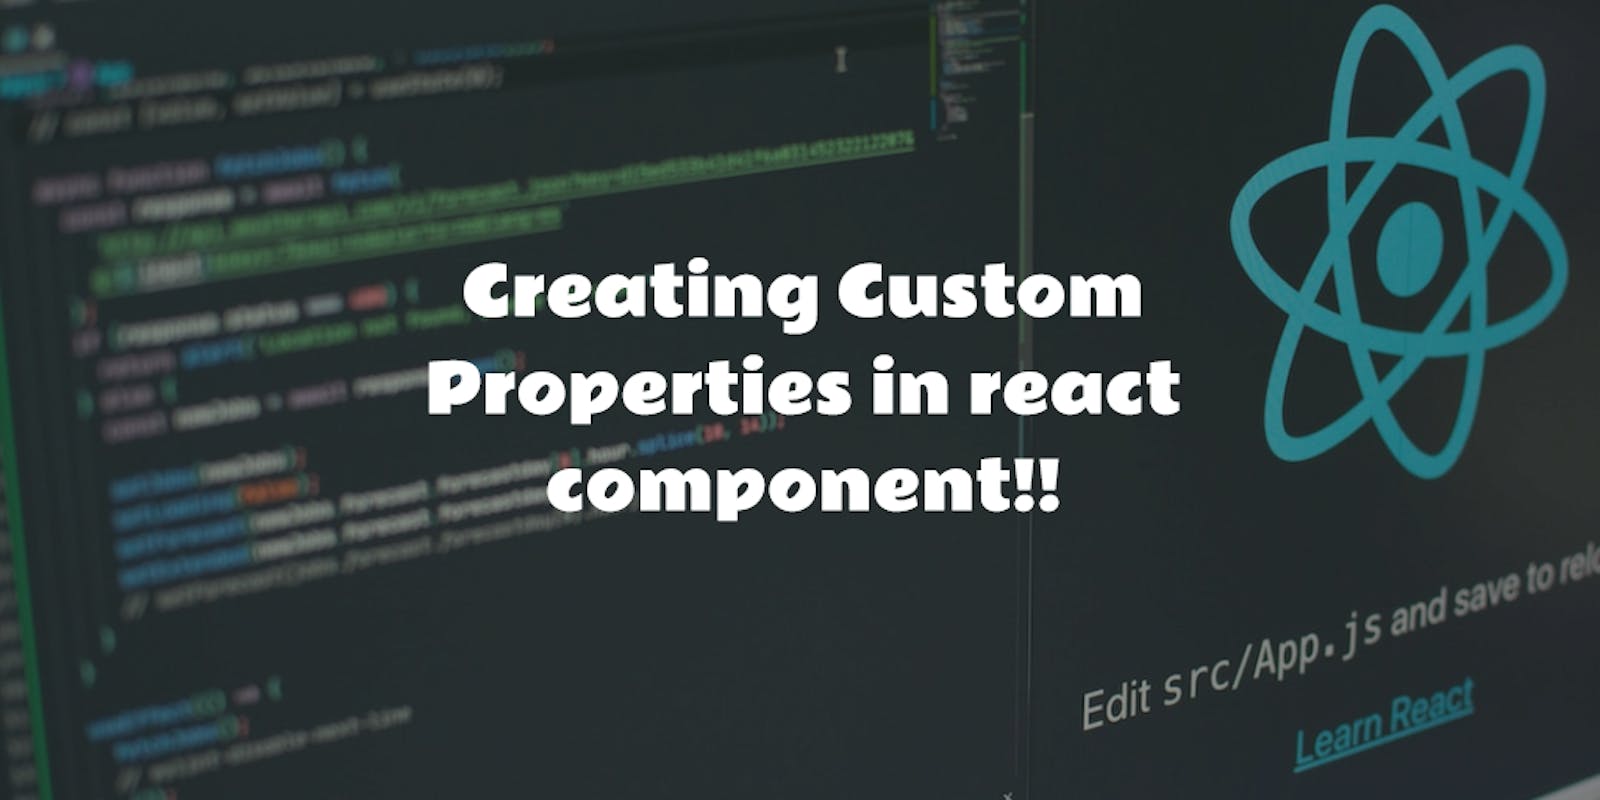 Creating custom properties in react component